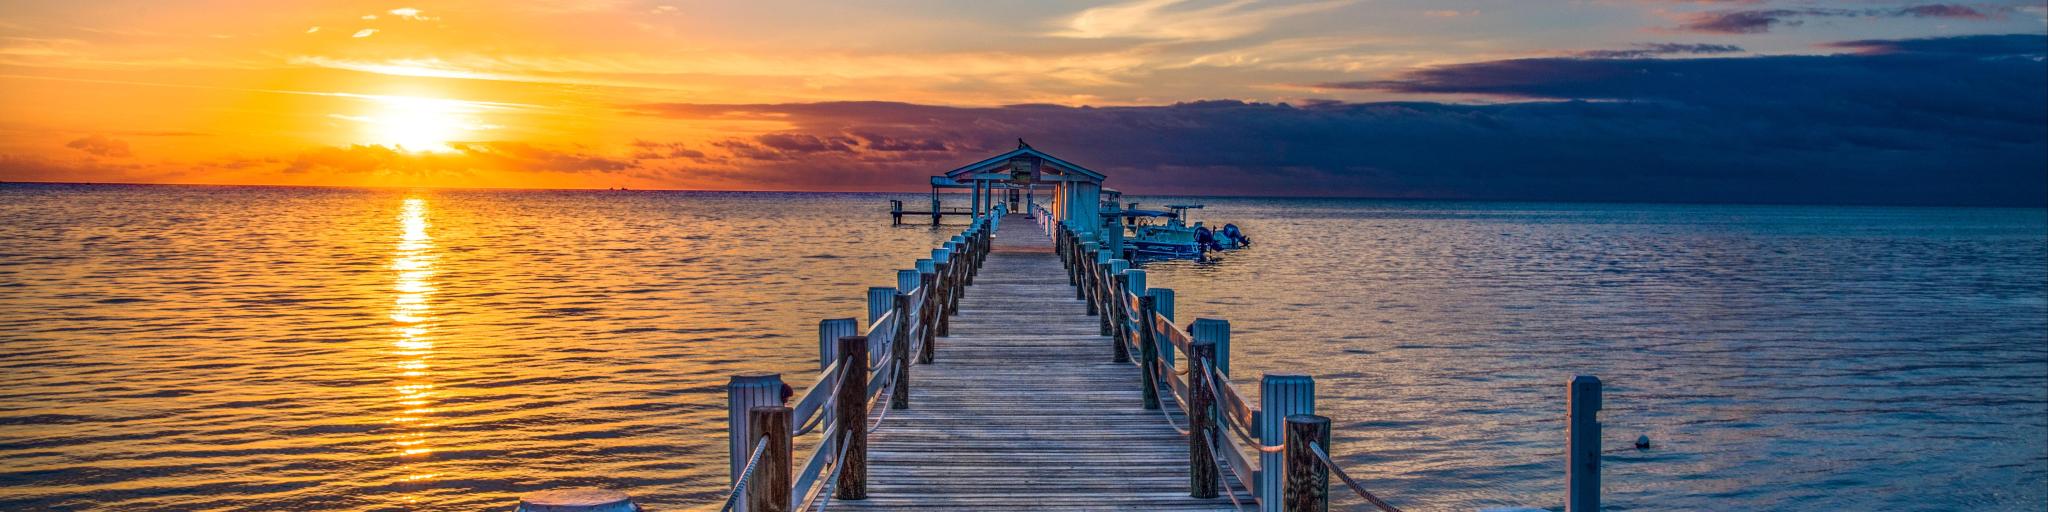 Islamorada, Florida at Keys Dock Pier at sunrise.